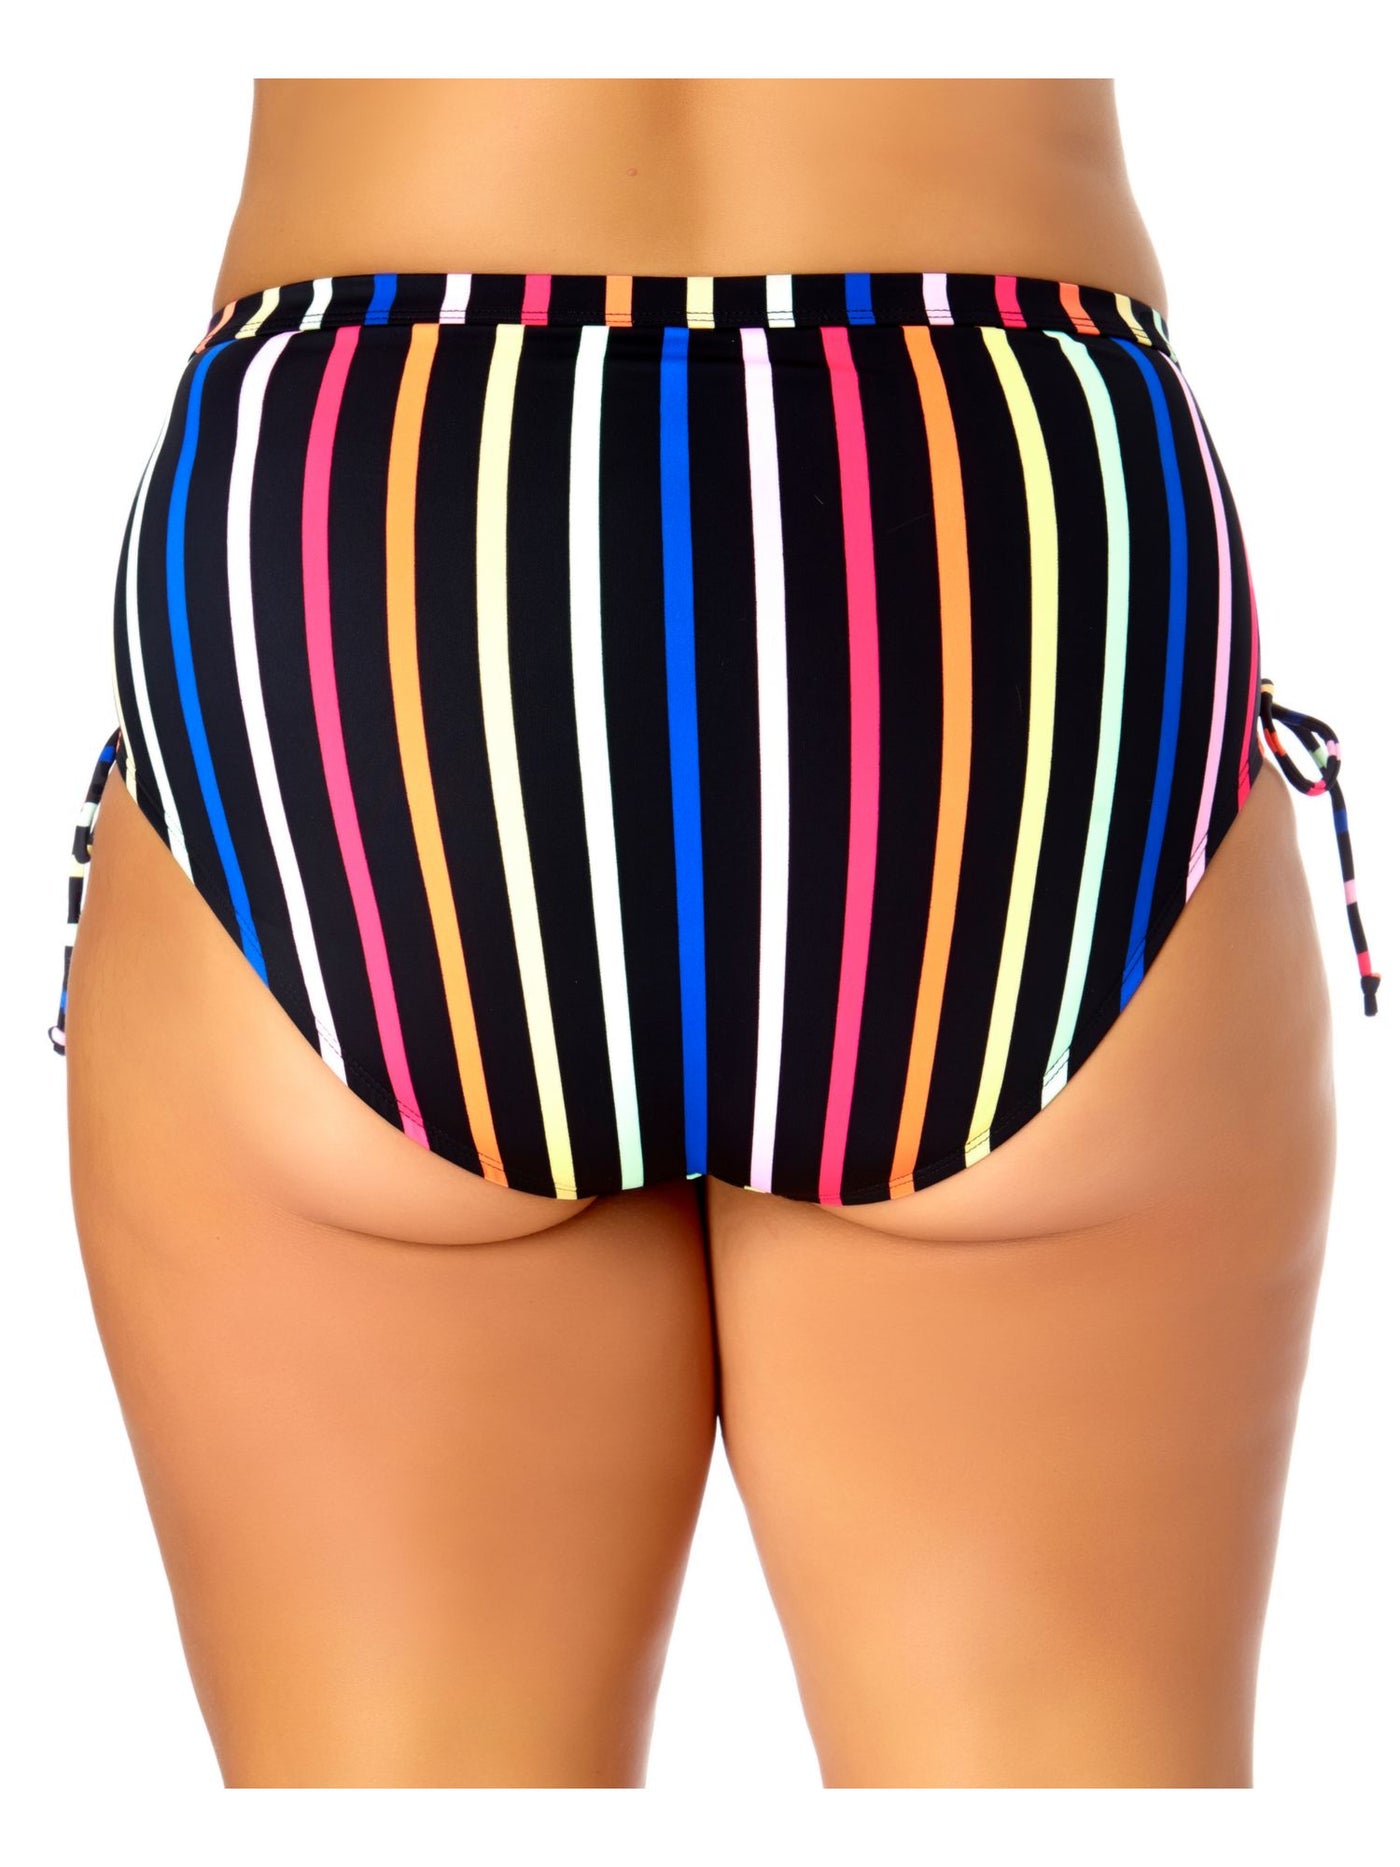 CALIFORNIA SUNSHINE Women's Black Colorblocked Stripe Stretch Lace-Up Bikini Moderate Coverage Tie High Waisted Swimsuit Bottom 2X